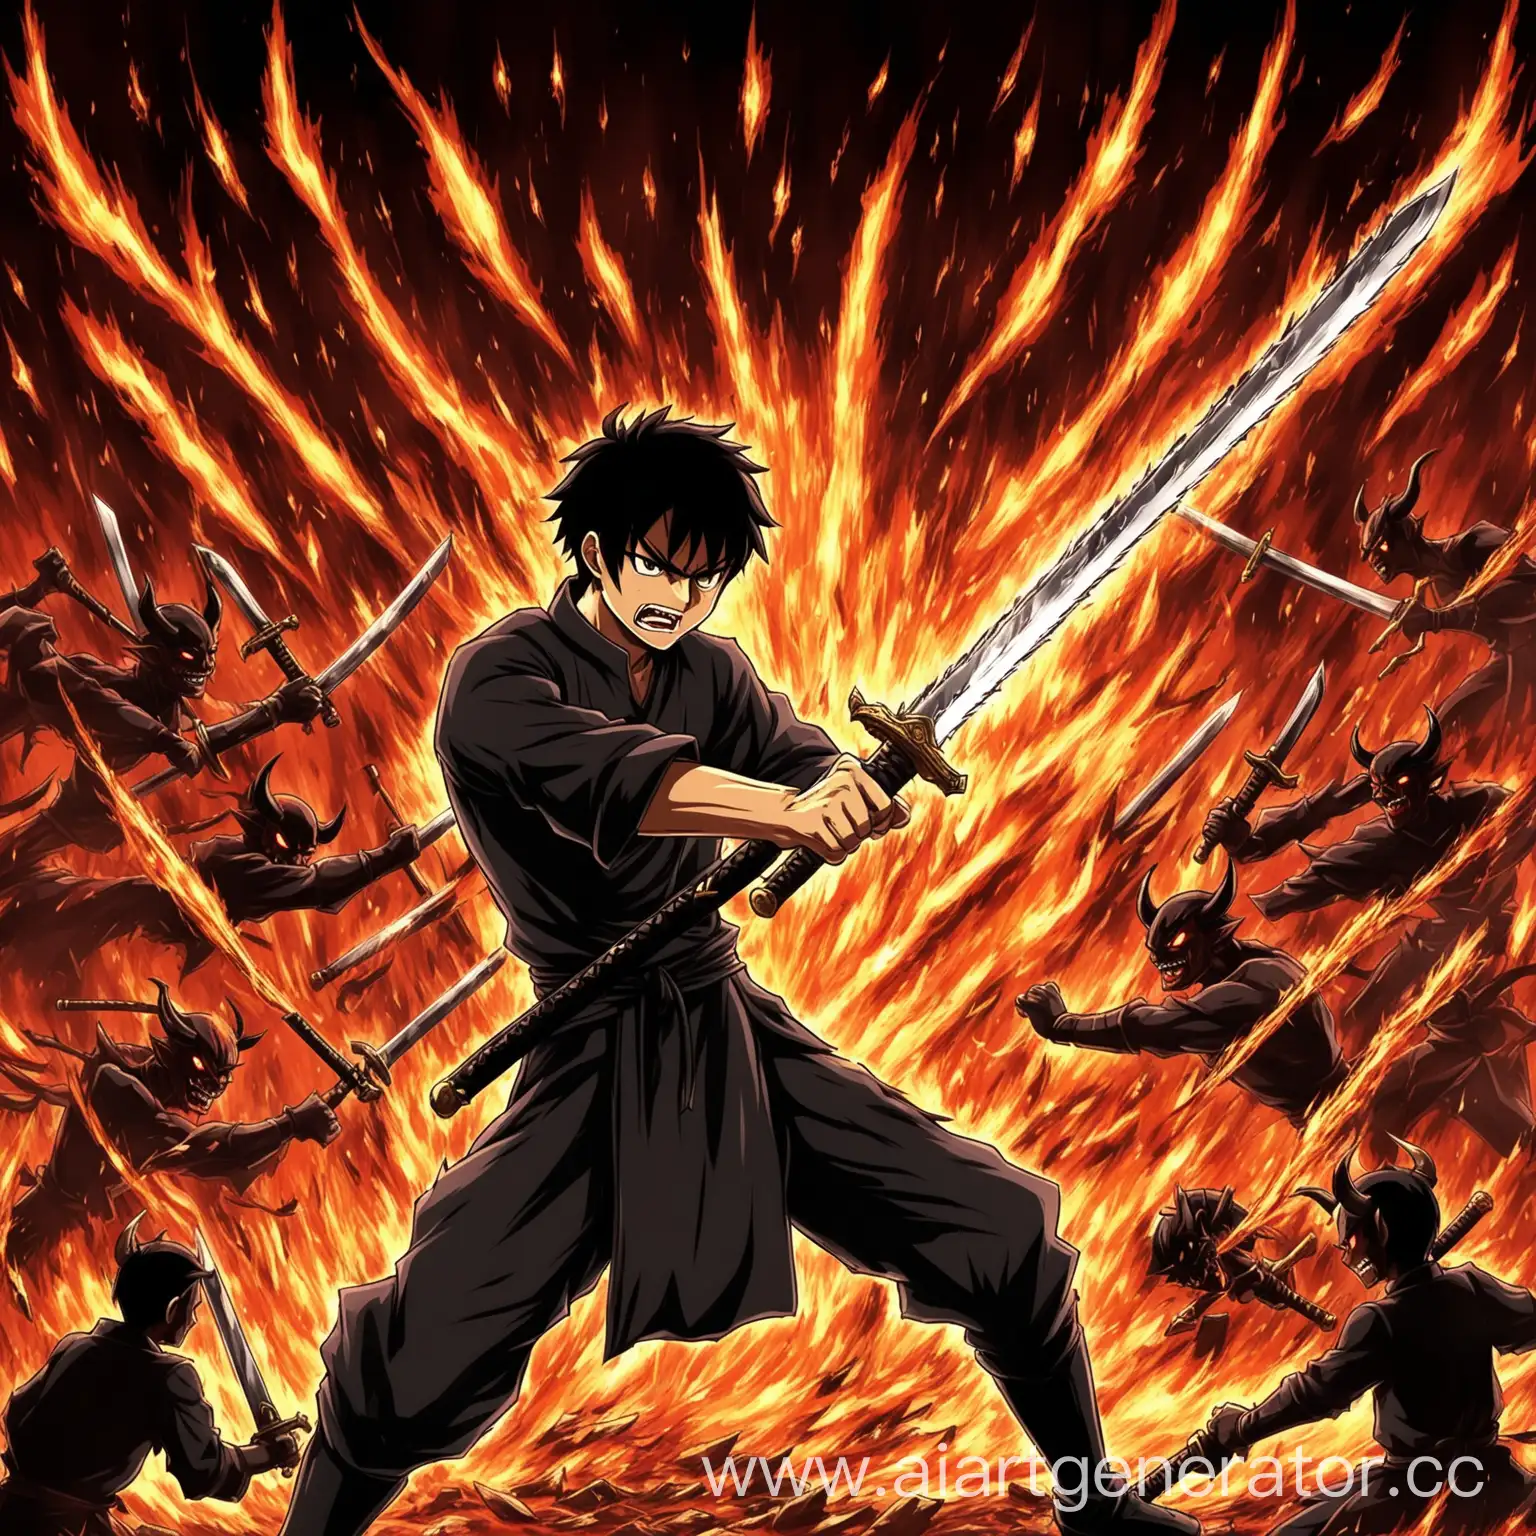 Anime-Swordsman-Using-Fire-Strike-to-Battle-Demon